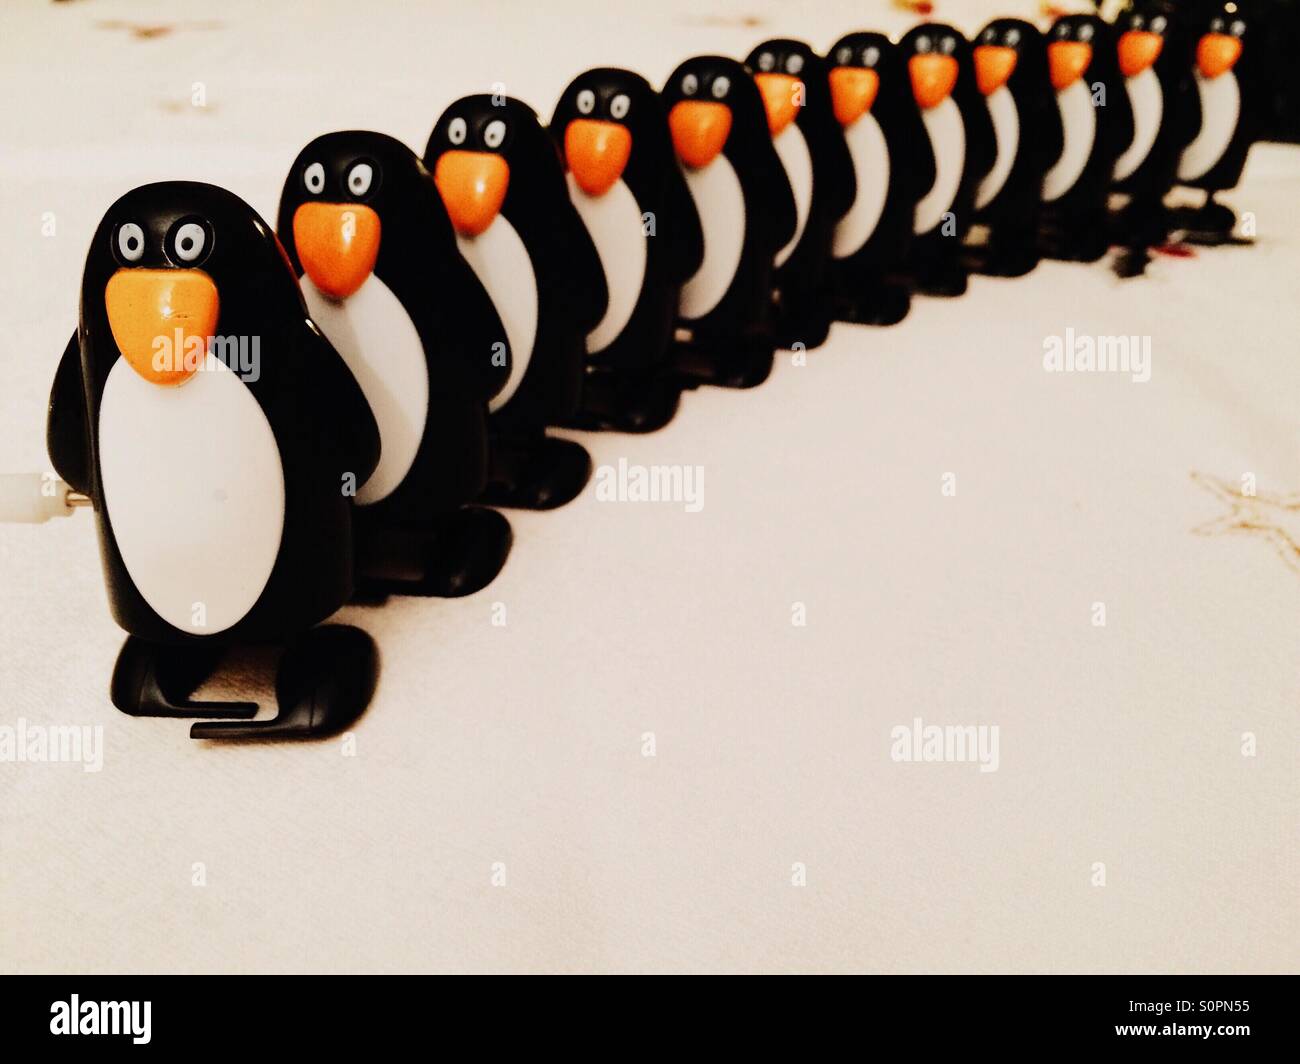 Toy penguins Stock Photo